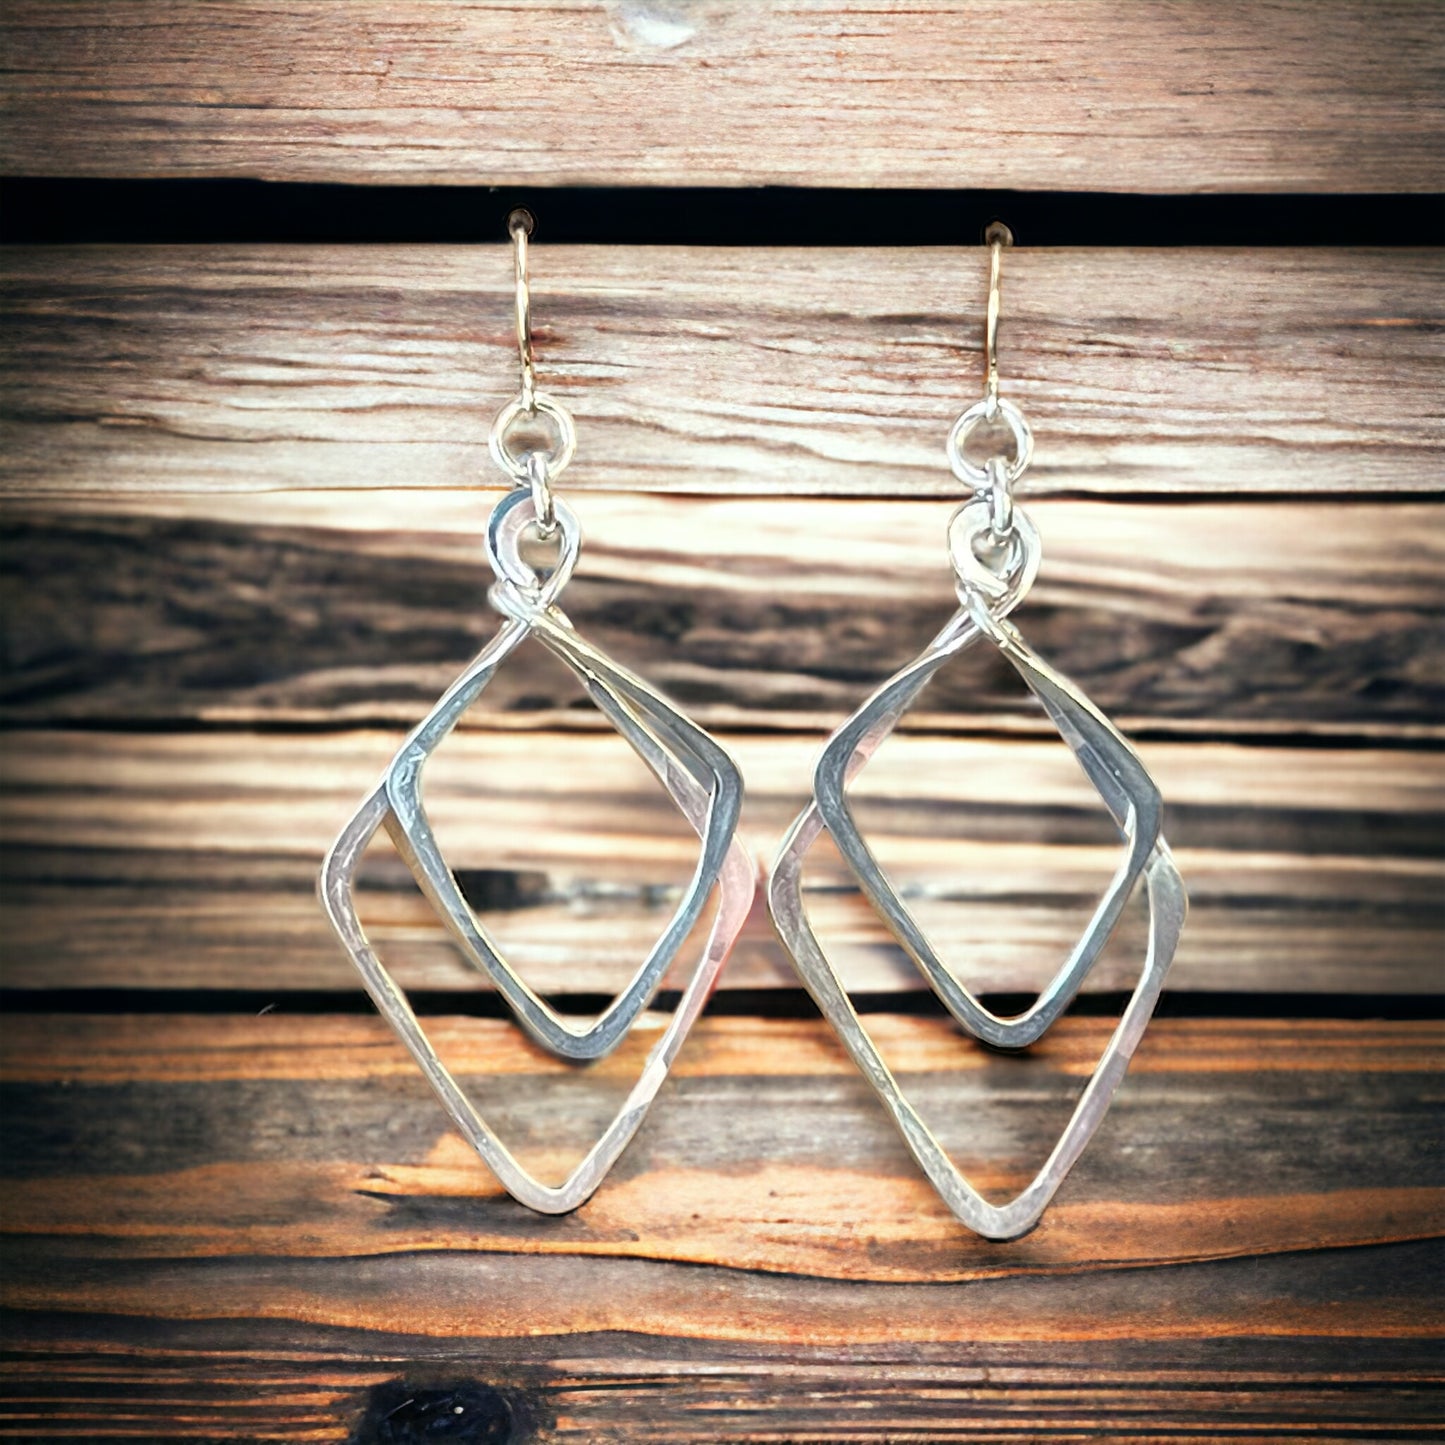 Aluminum Double Triangle Earrings